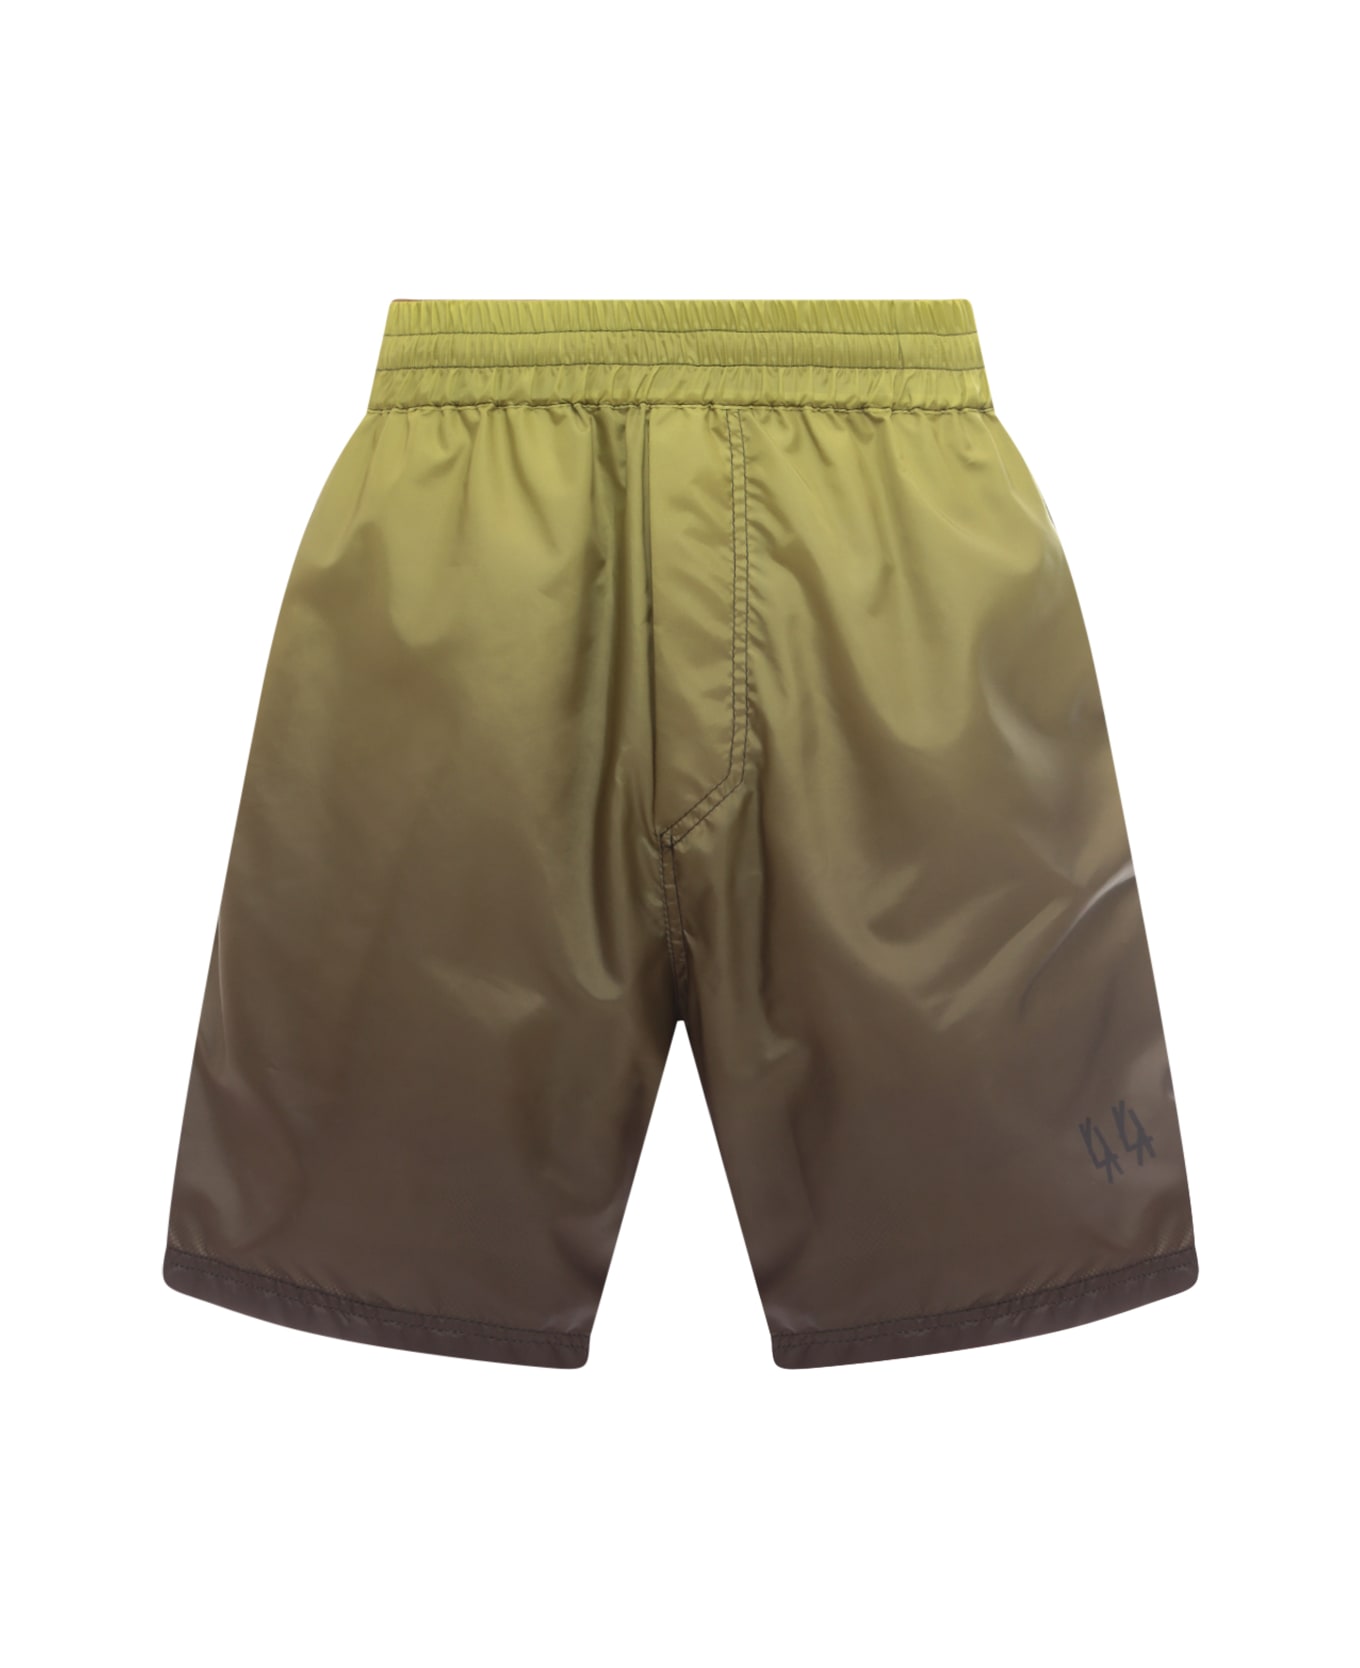 44 Label Group Bermuda Shorts - Green ショートパンツ